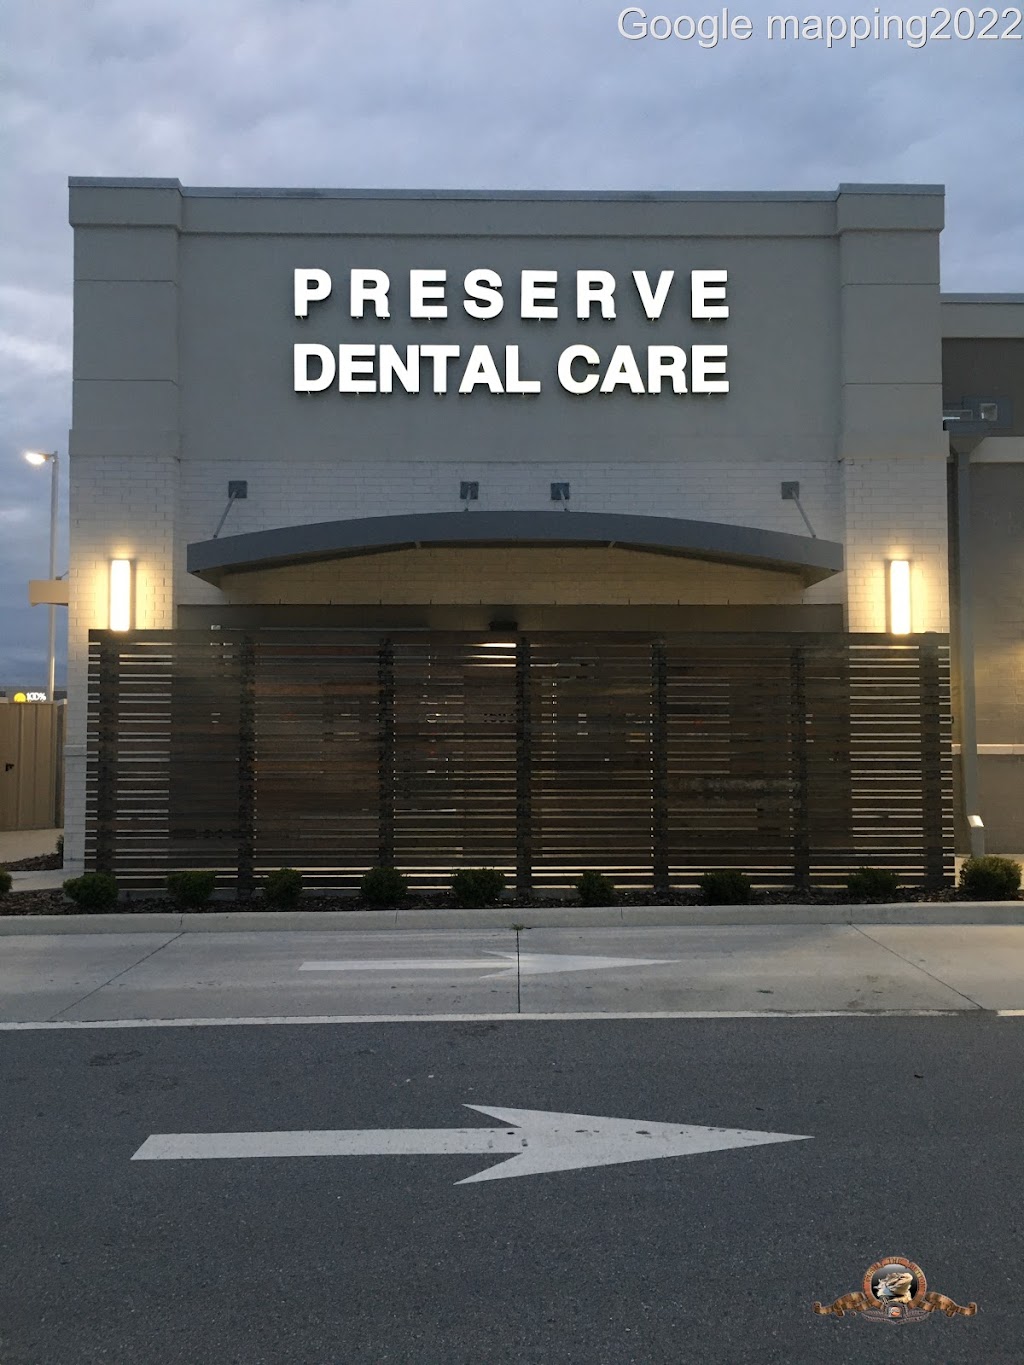 Preserve Dental Care | 16030 Preserve Marketplace Blvd, Odessa, FL 33556, USA | Phone: (813) 336-3871